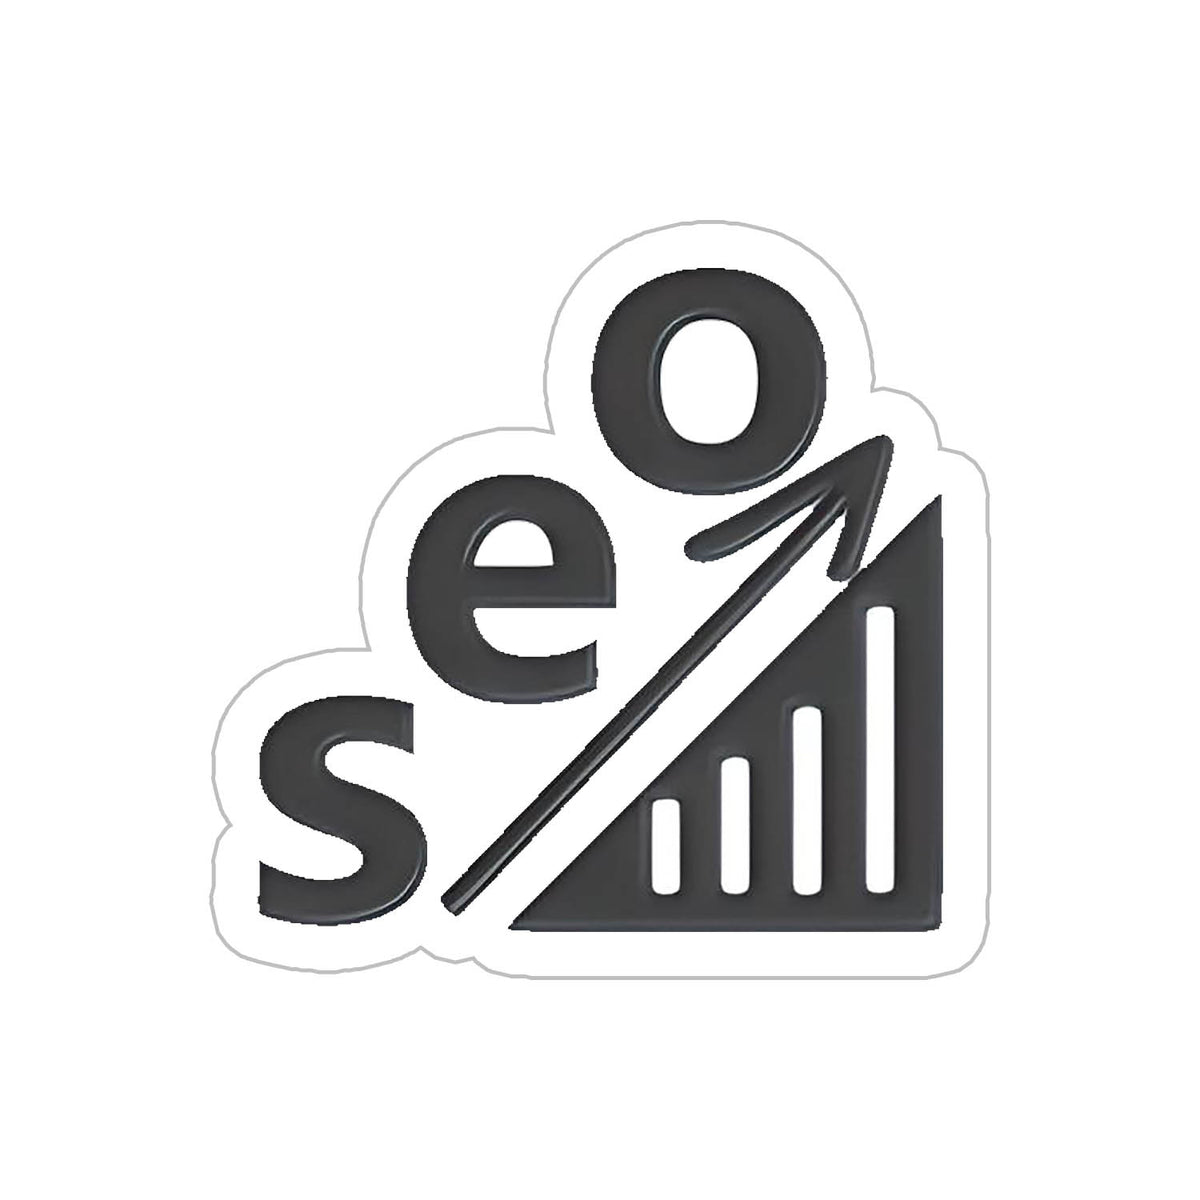 SEO Growth Sticker